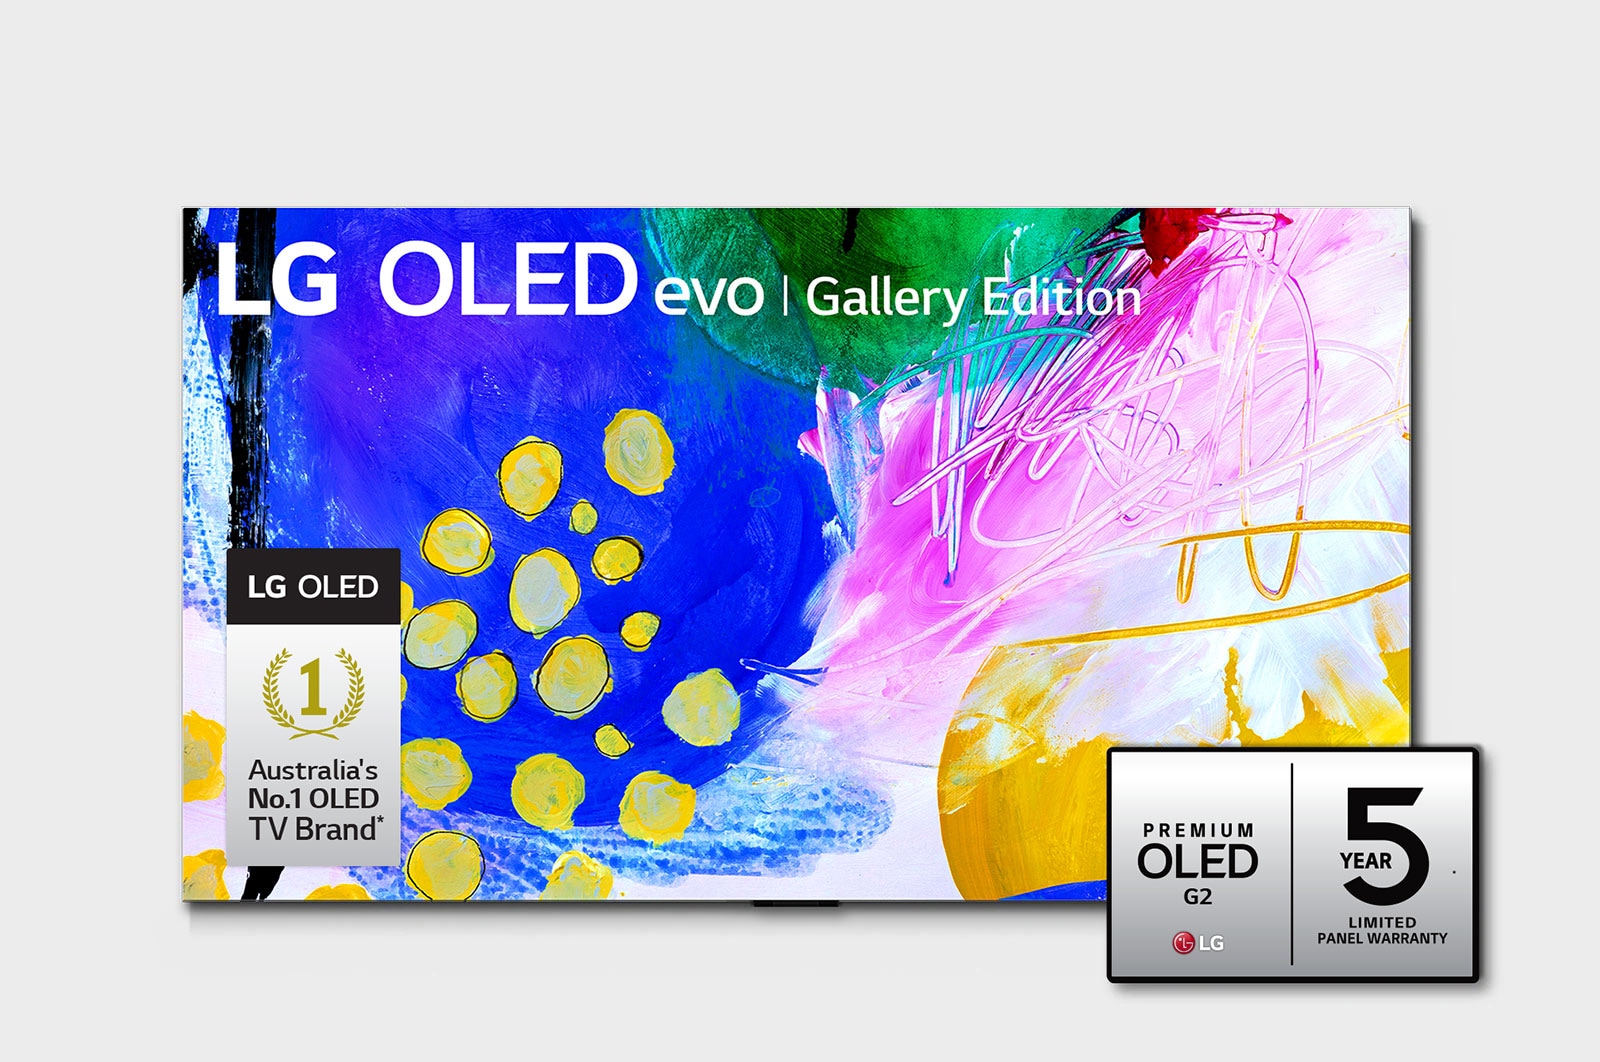 LG OLED evo G2 65 inch 4K Smart TV Gallery Edition with Self Lit OLED Pixels, OLED65G2PSA